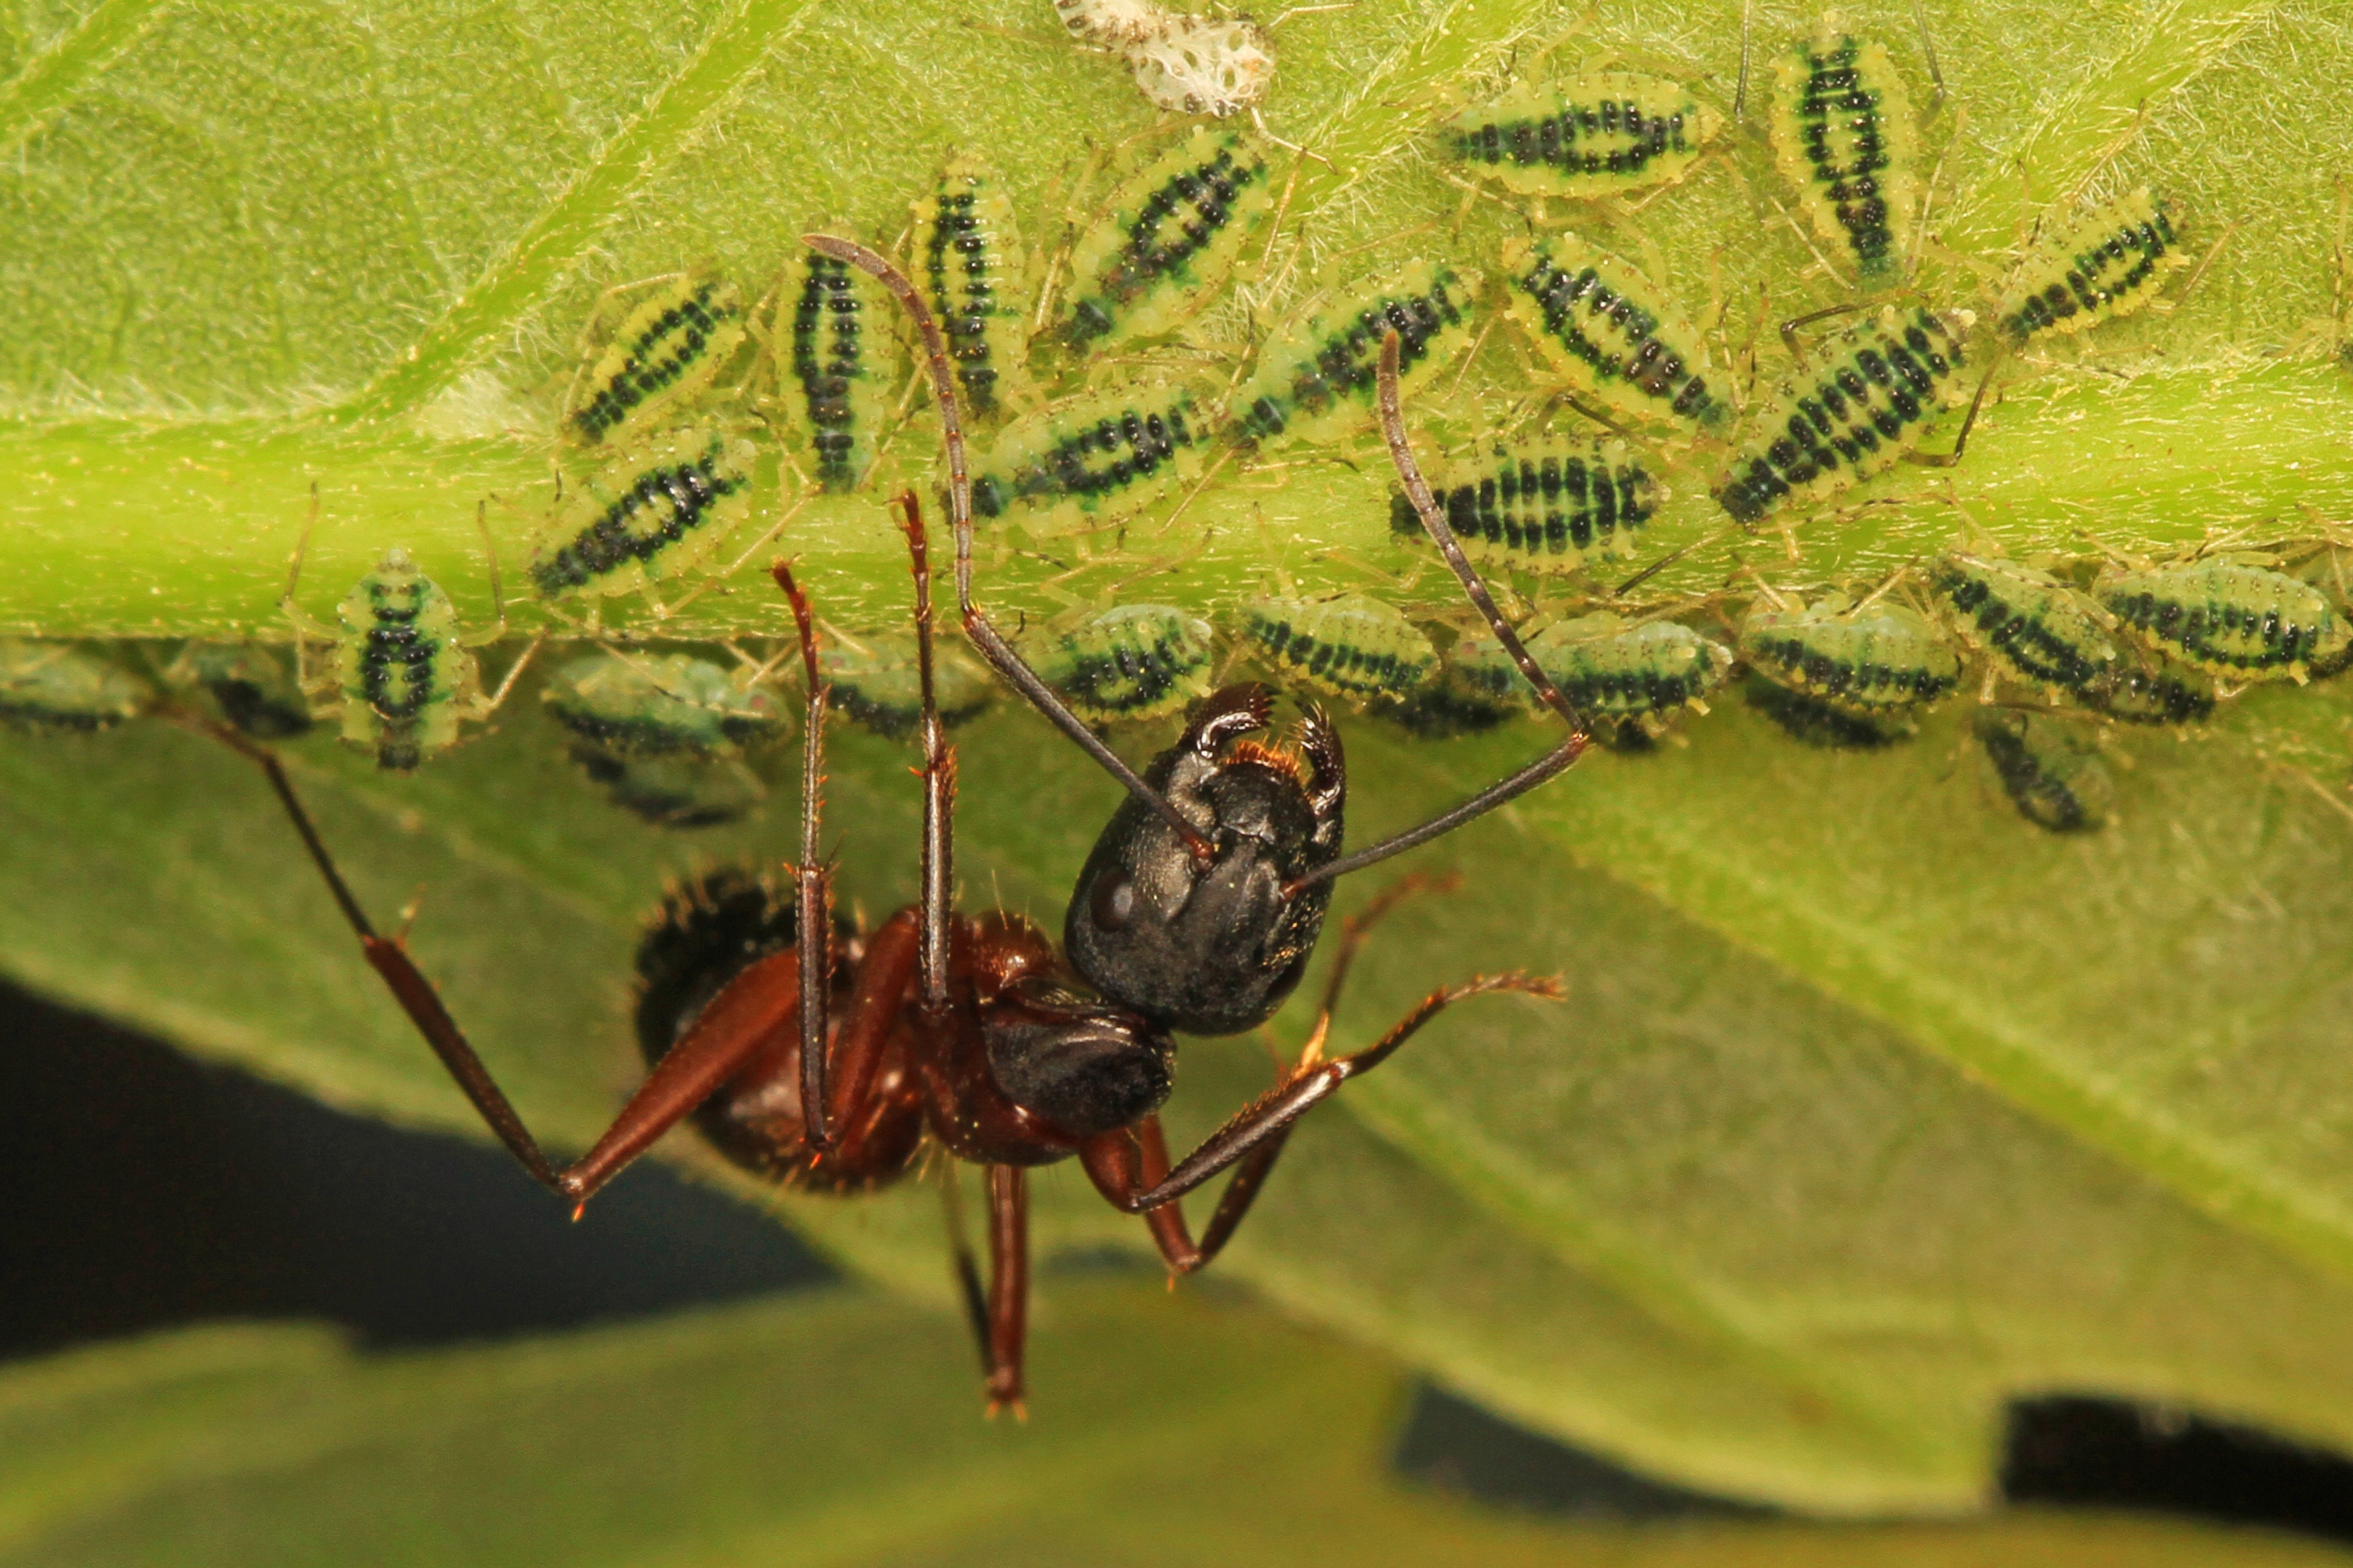 Carpenter Ant and Aphids, Meadowood Farm SRMA, Mason Neck, Virginia